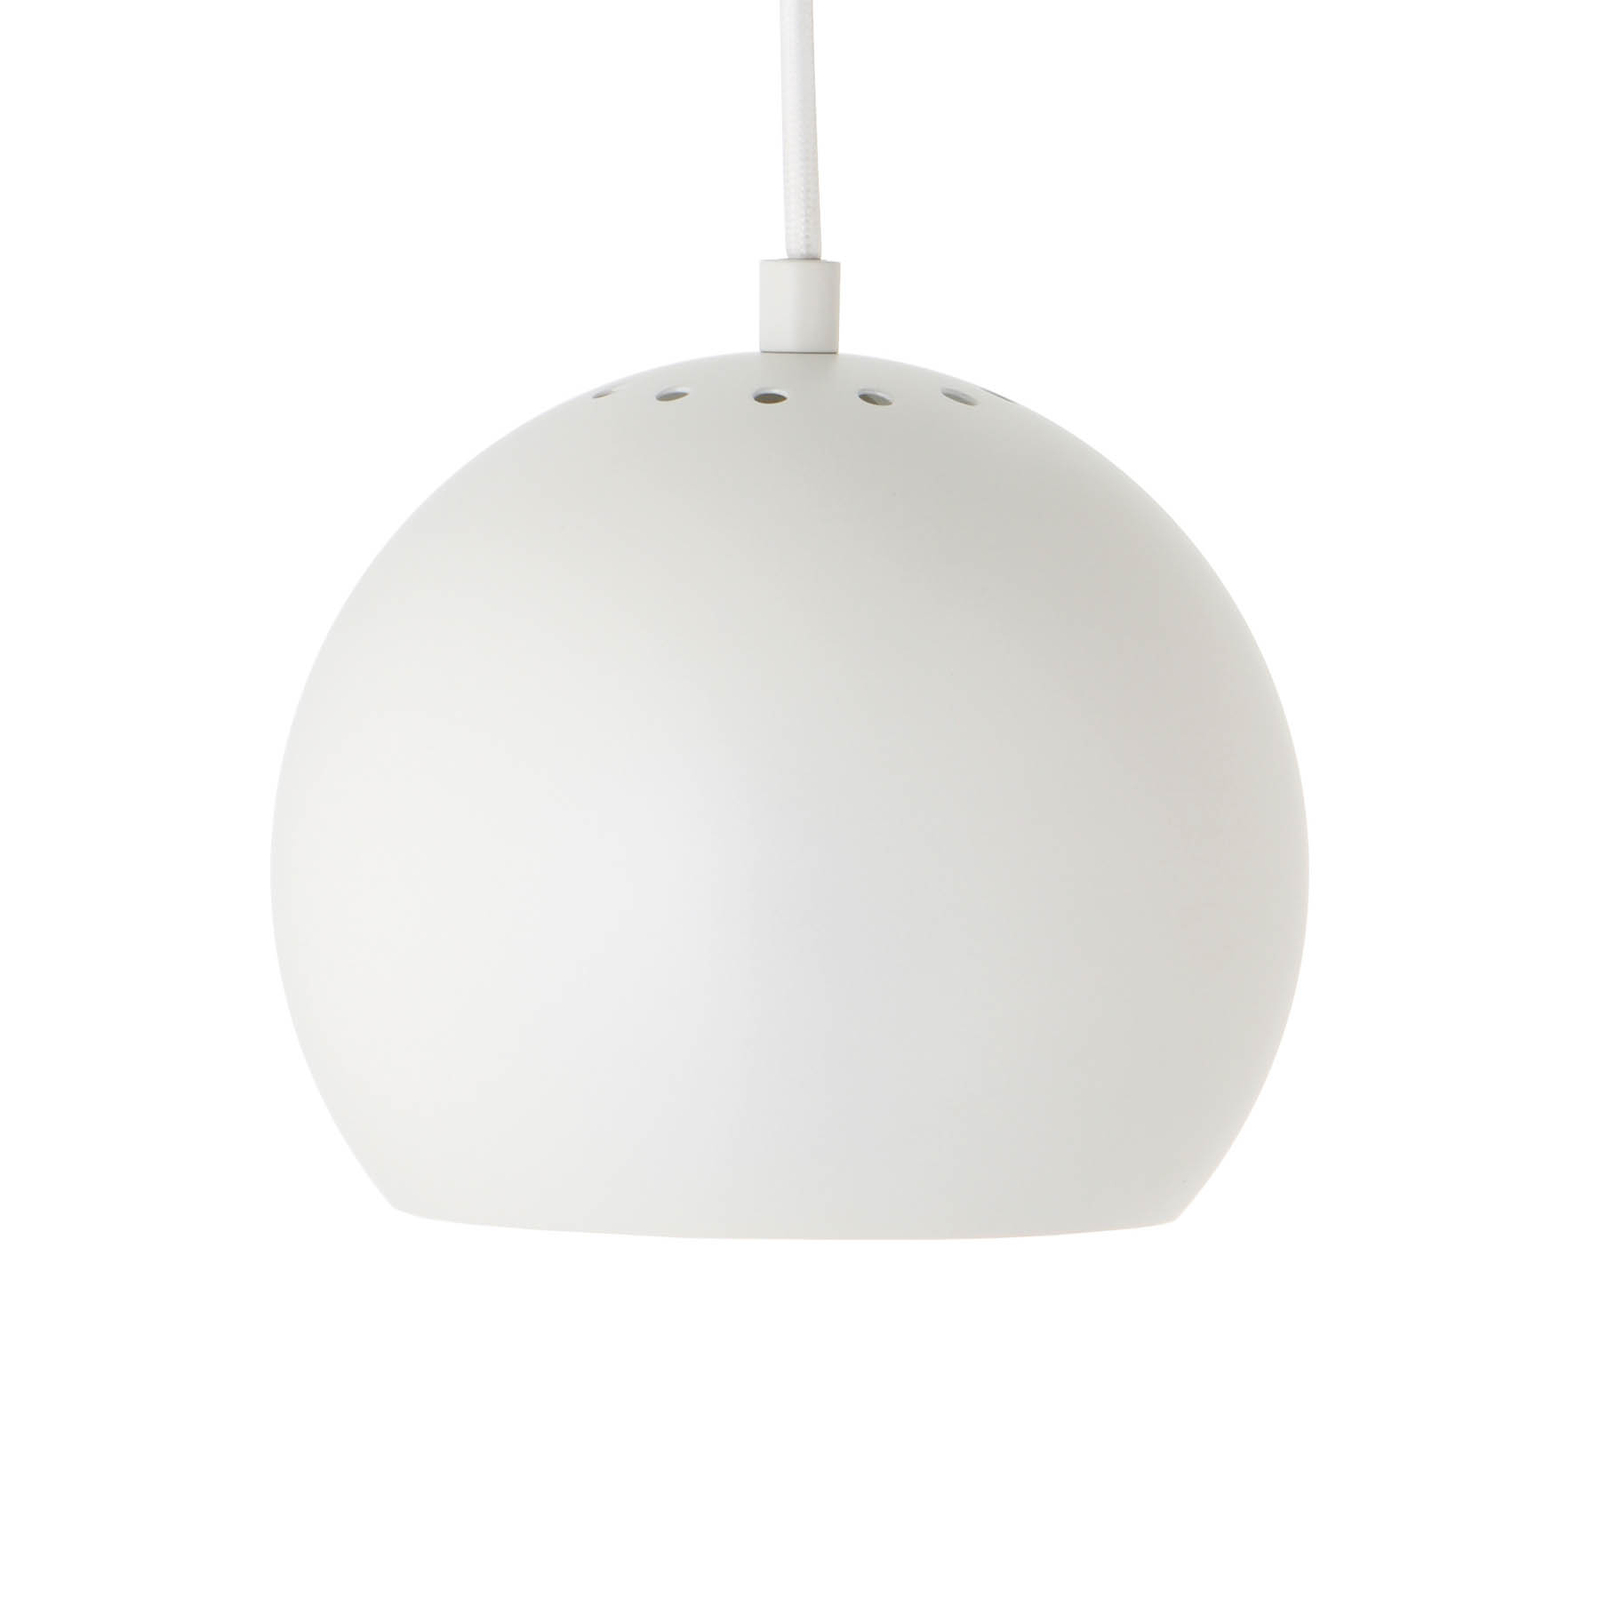 FRANDSEN gömb függő lámpa Ø 18 cm matt fehér